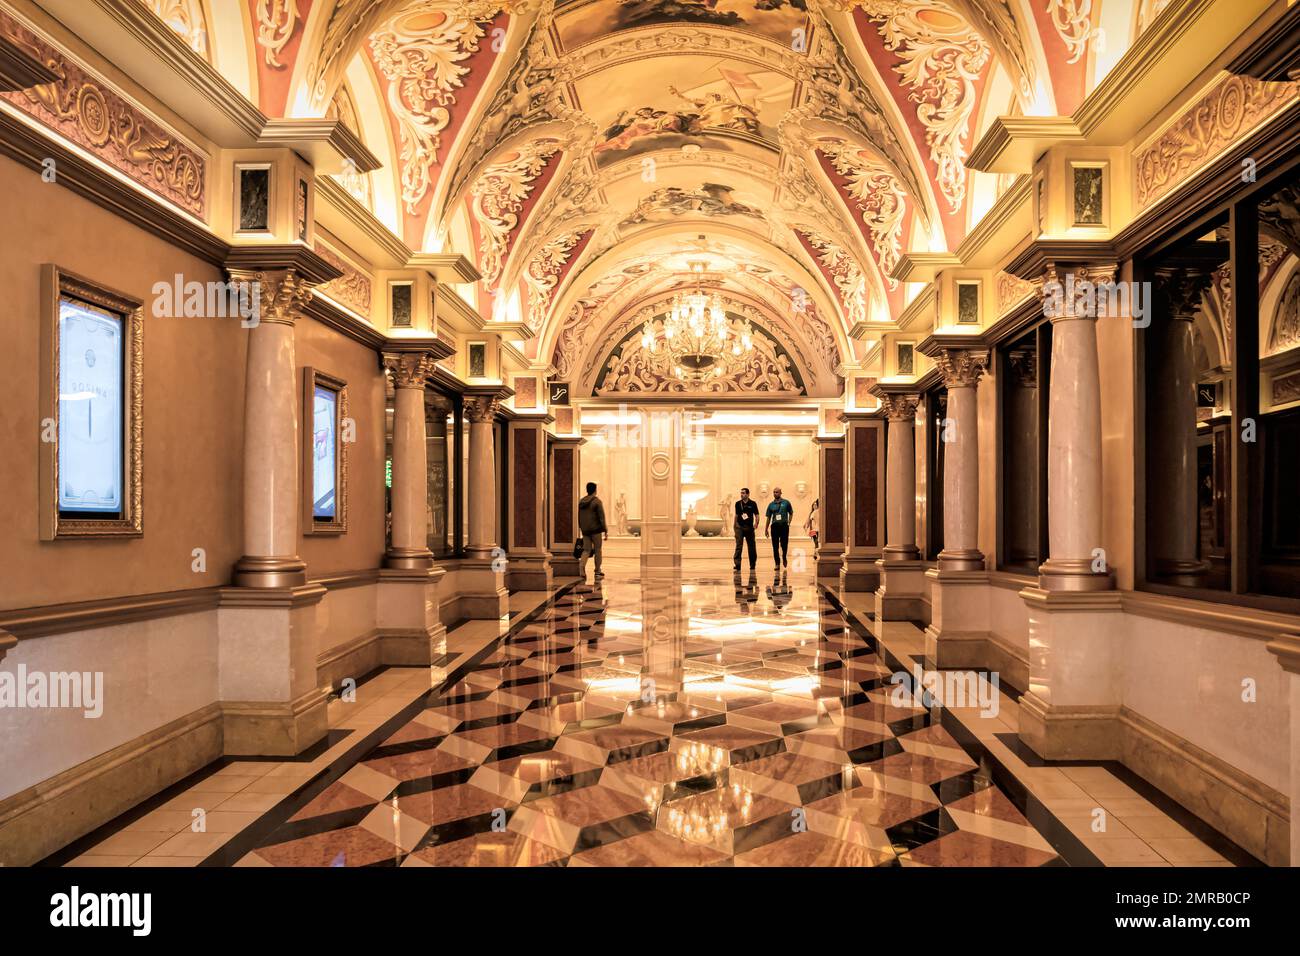 Ornate interior of the The Venetian Casino in Las Vegas, Nevada, USA Stock Photo